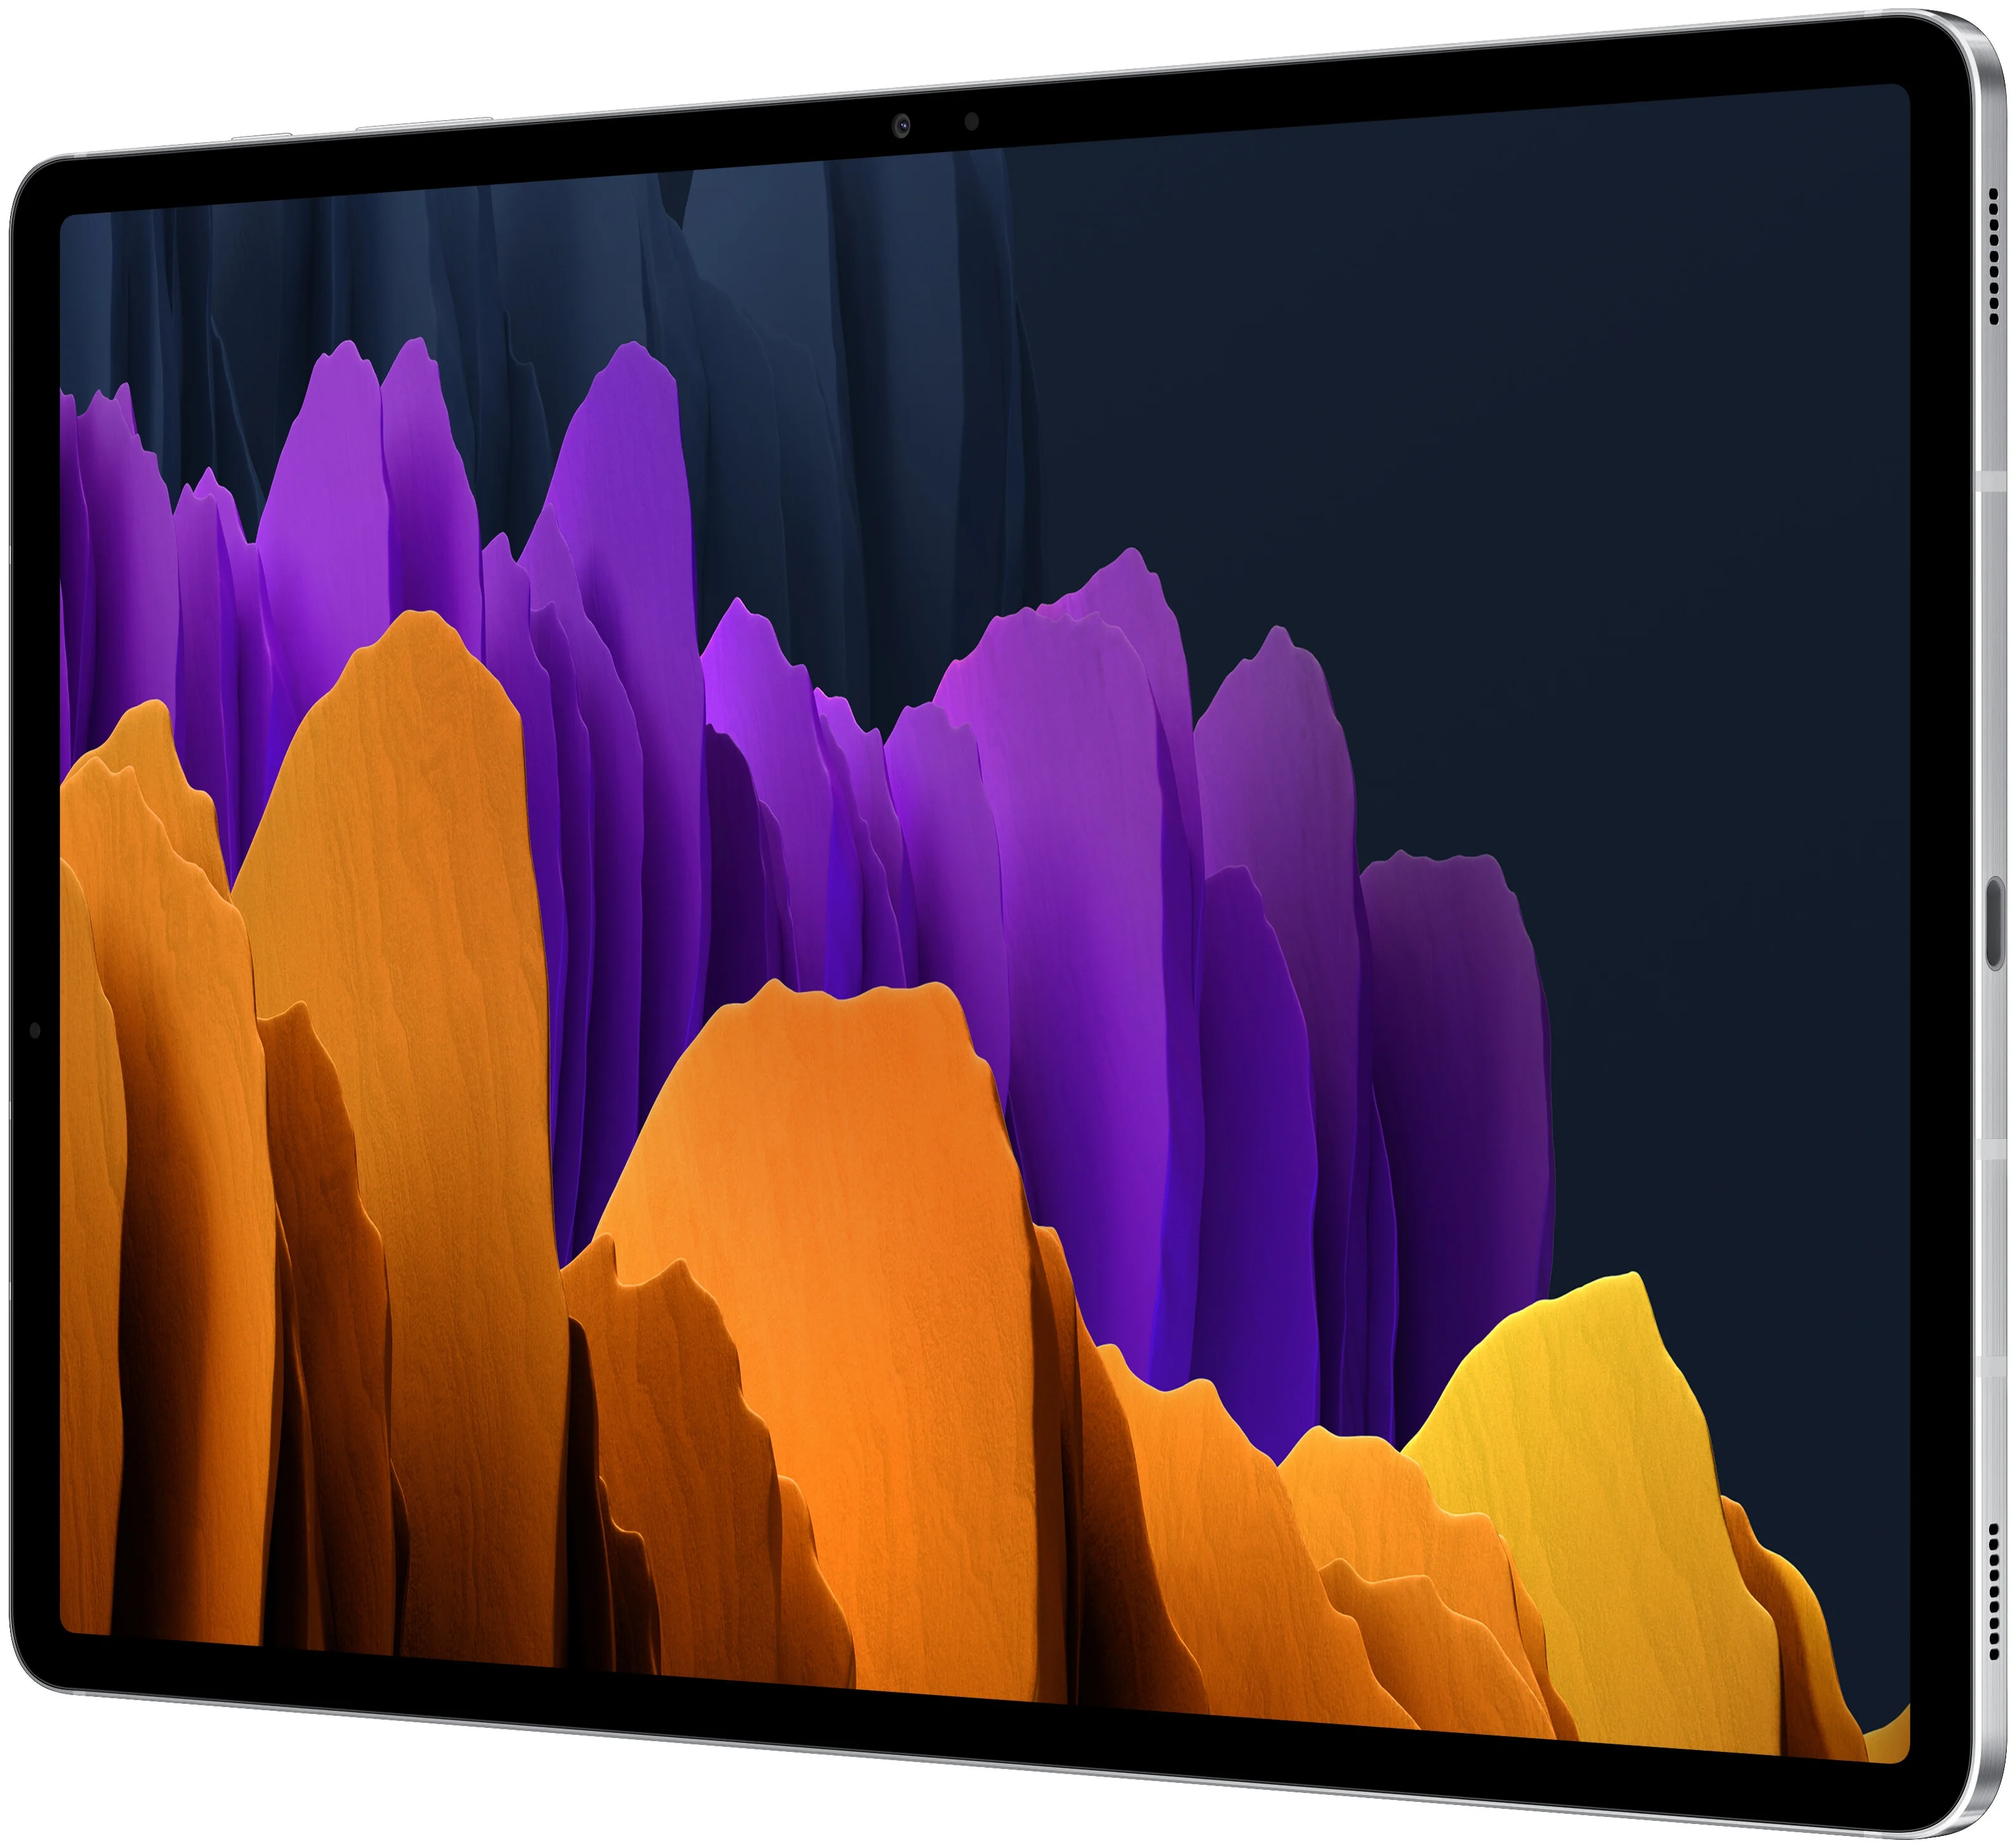 Samsung Galaxy Tab S7+ 12.4 SM-T975 128Gb (2020) - проводные интерфейсы: USB-C